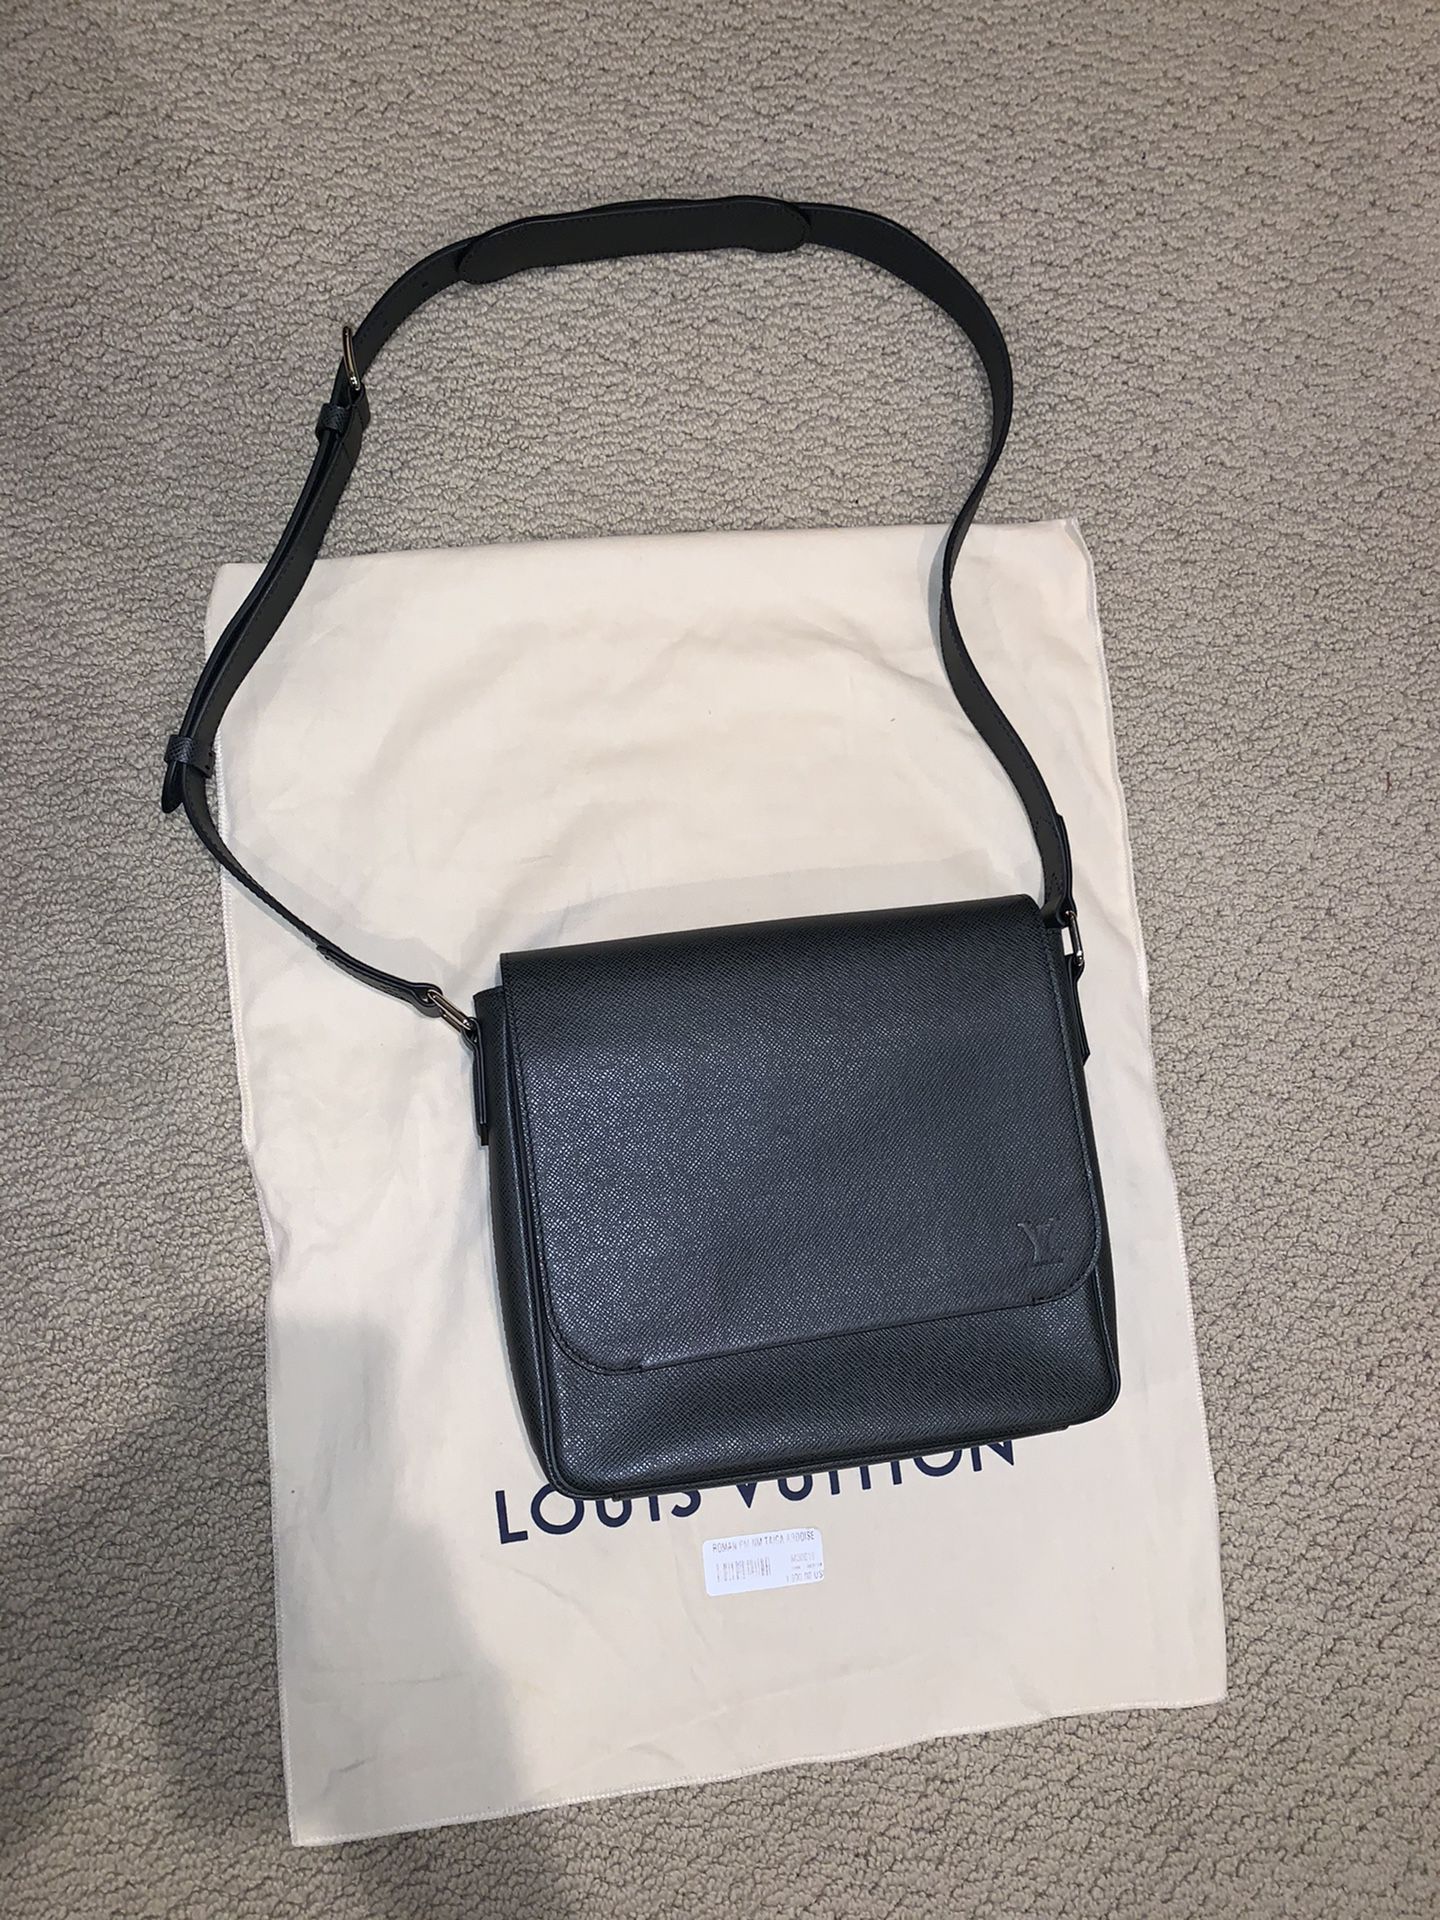 Brand new Louis Vuitton side bag